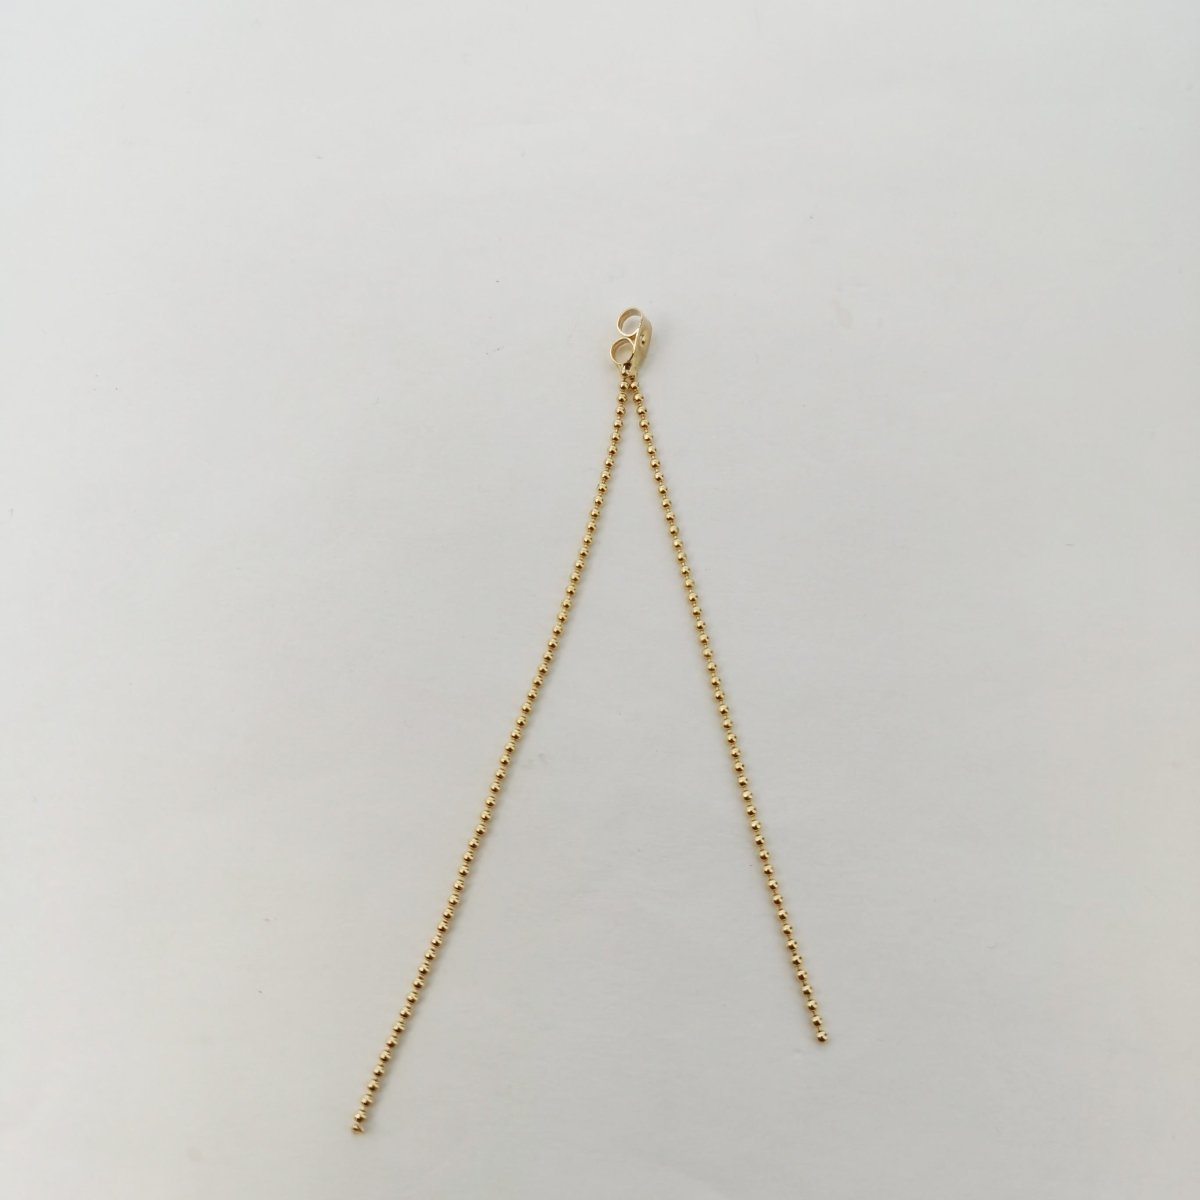 Golden Simple Chain Long Push Back Earring Back Gold Filled K-419 - DLUXCA